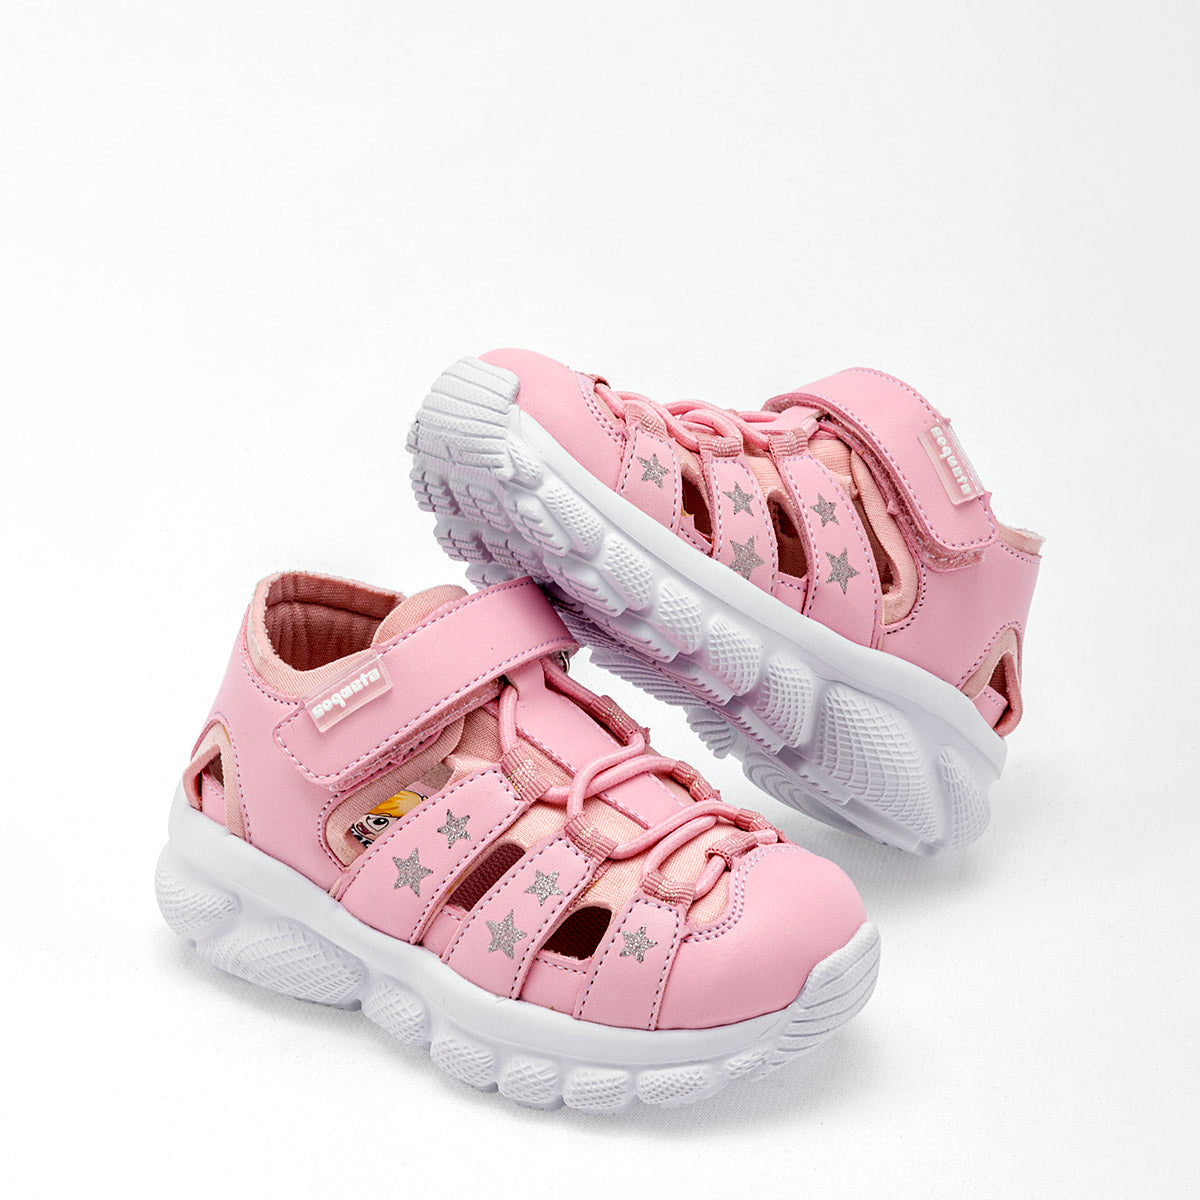 Pakar.com - Mayo: Regalos para mamá | Zapato para niña cod-126041